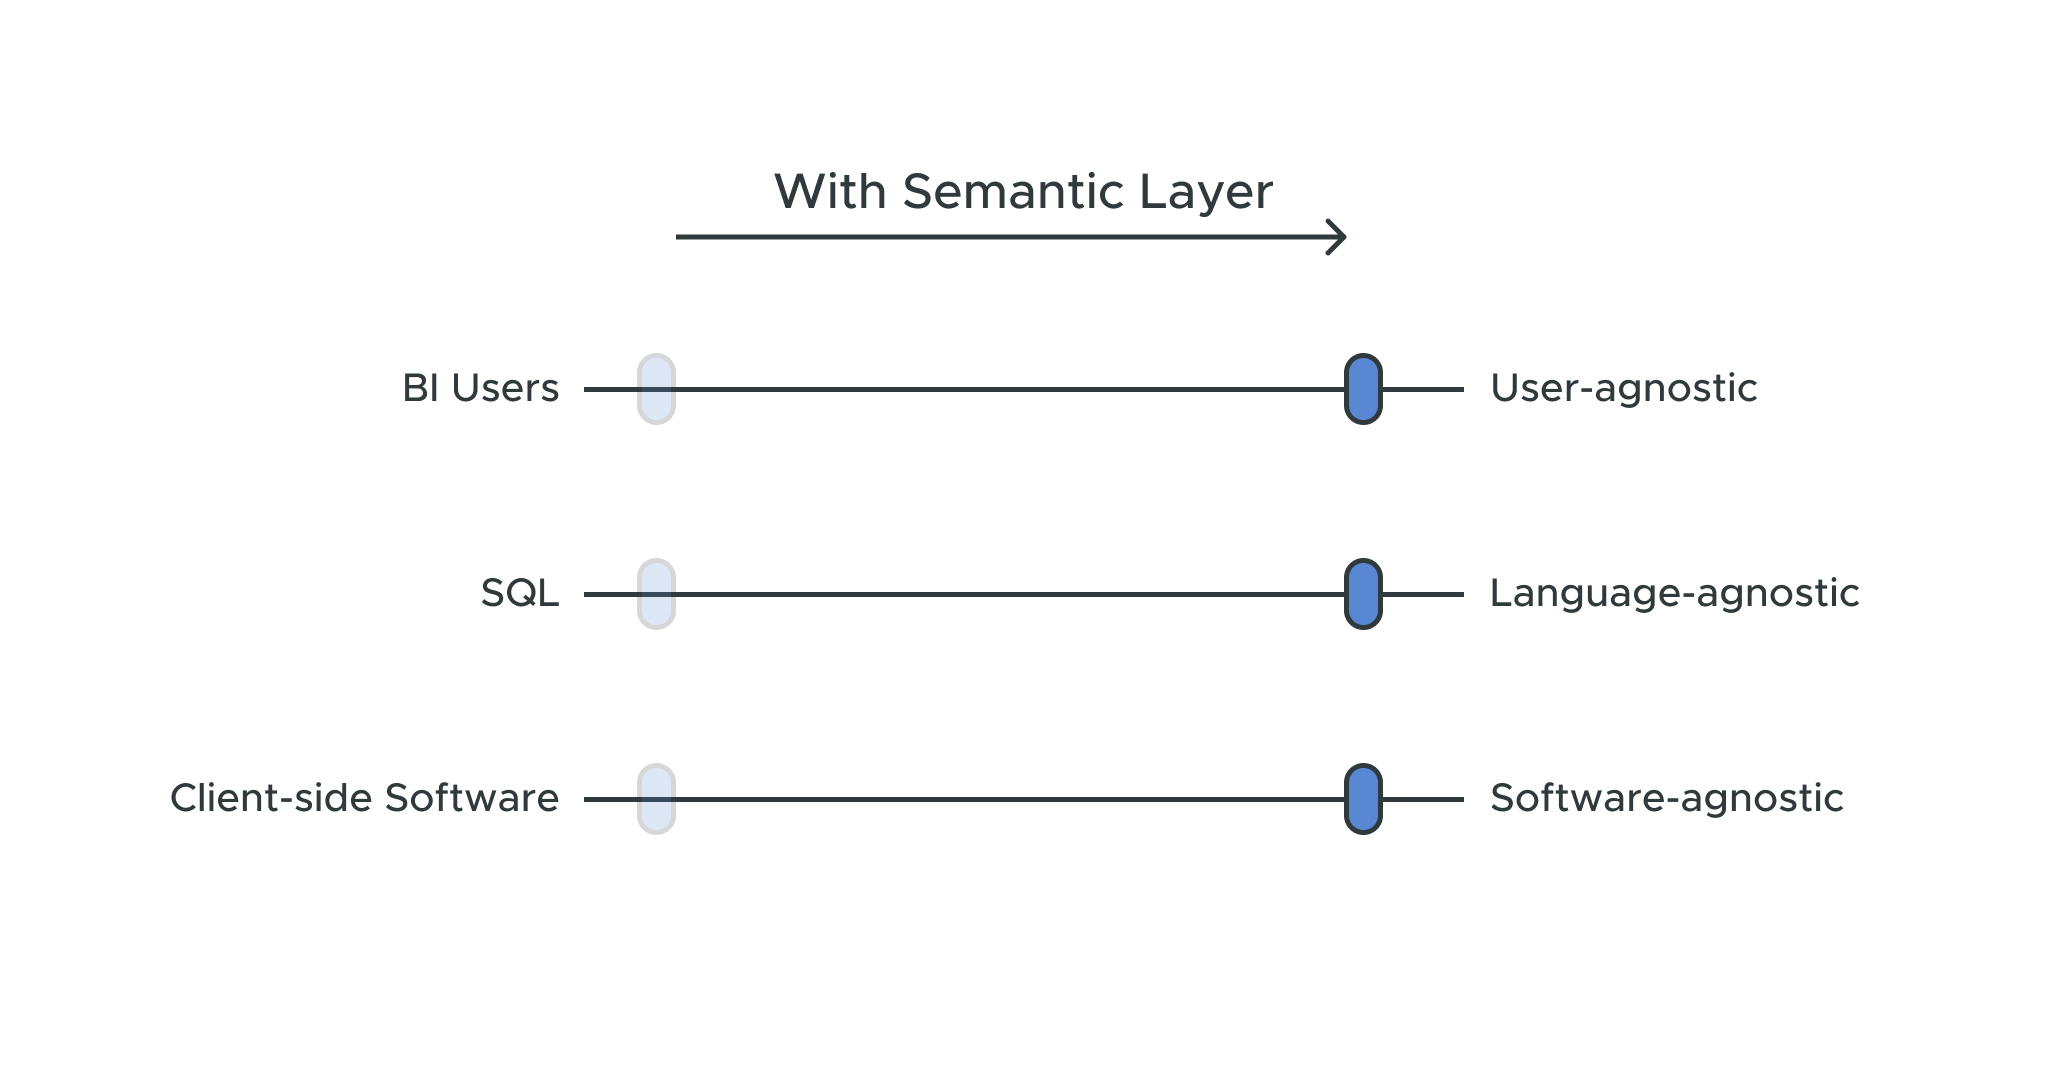 Semantic Layer provides data for everyone